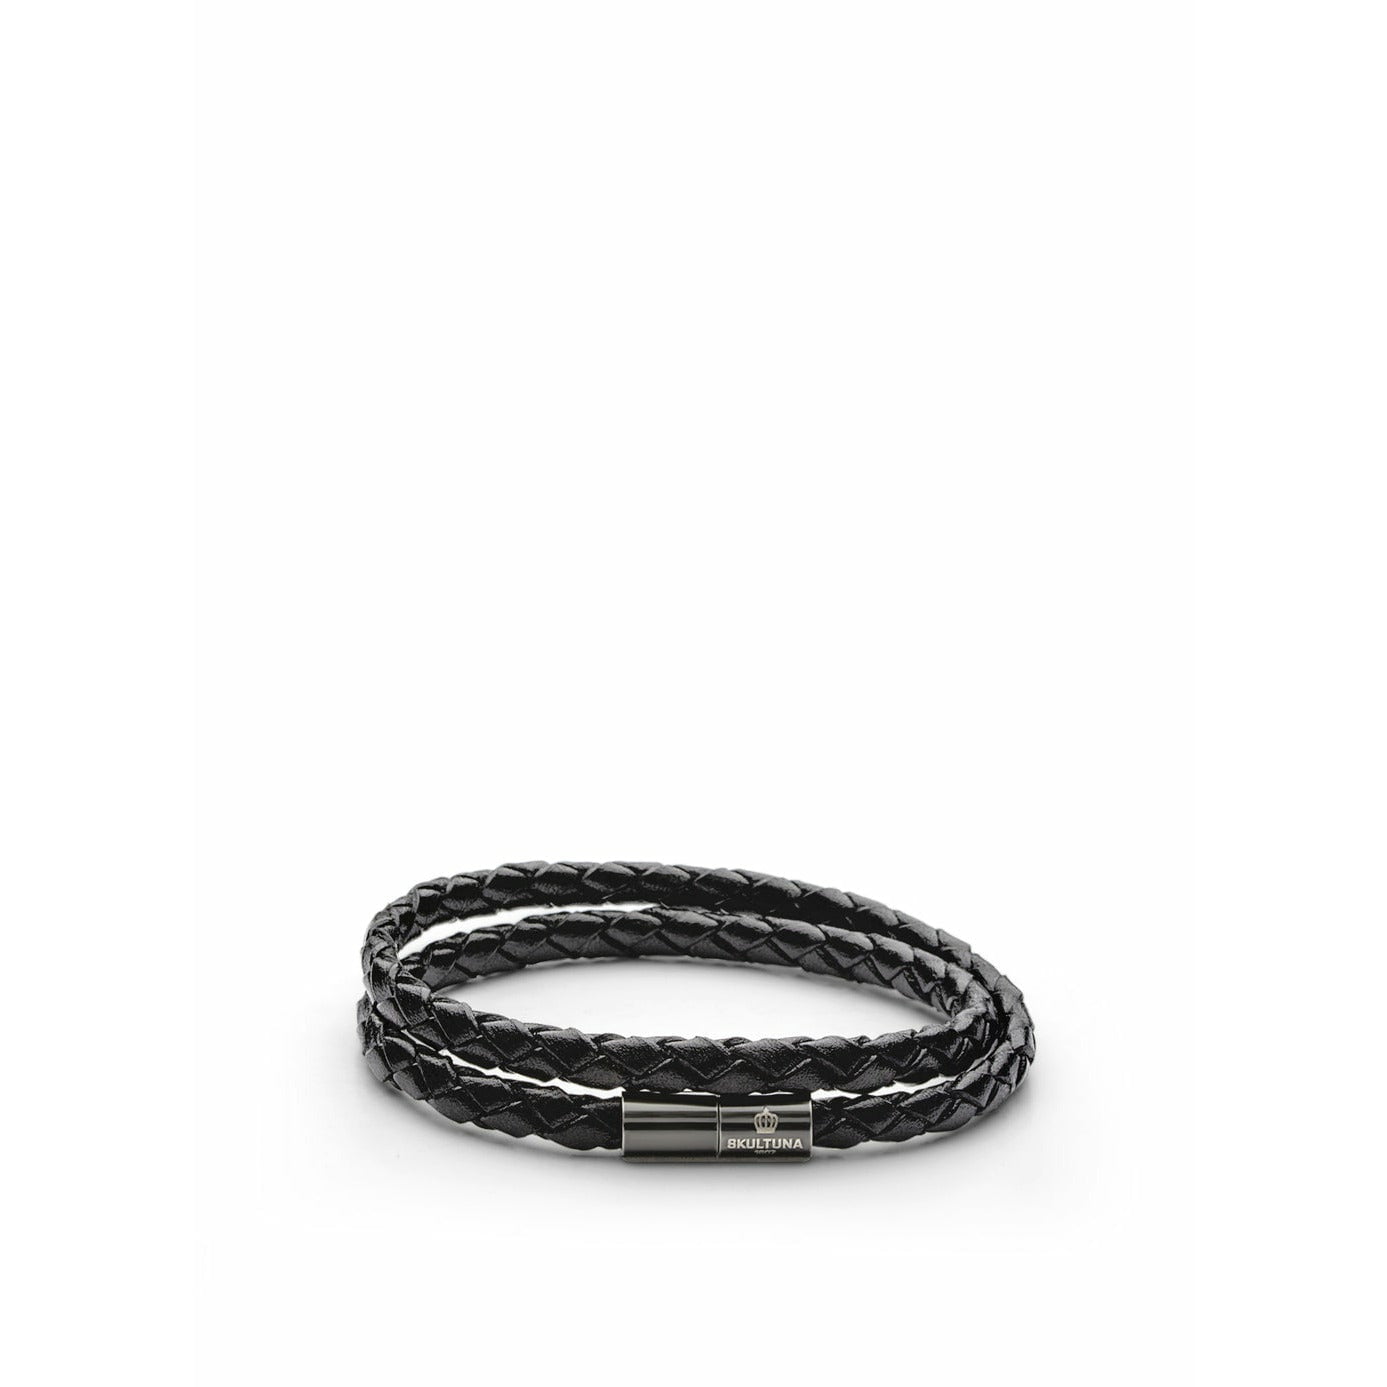 Skultuna Stealth -armbandet stort Ø18,5 cm, svart